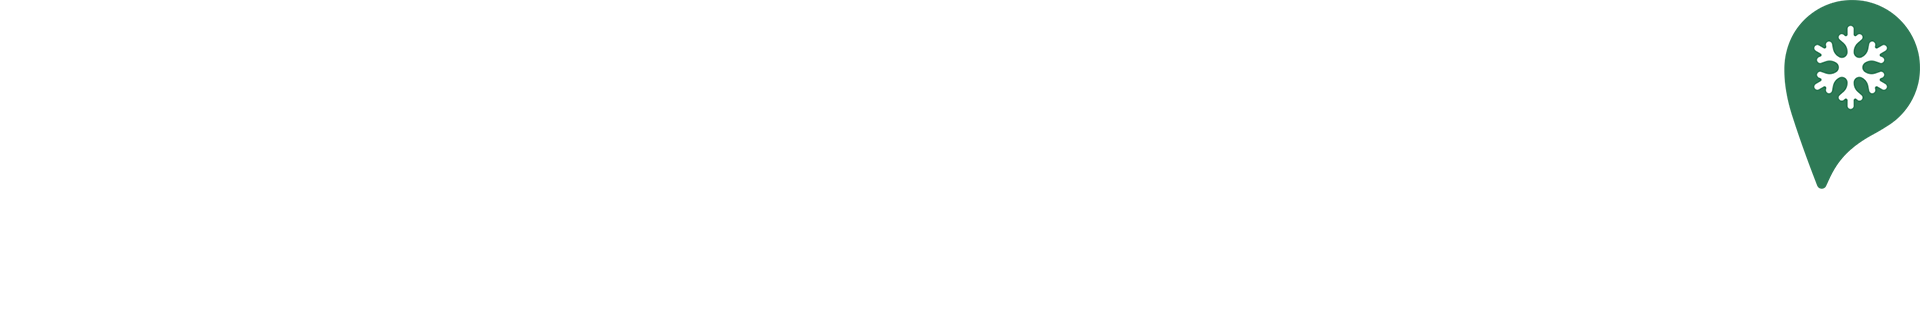 snosatra-logo